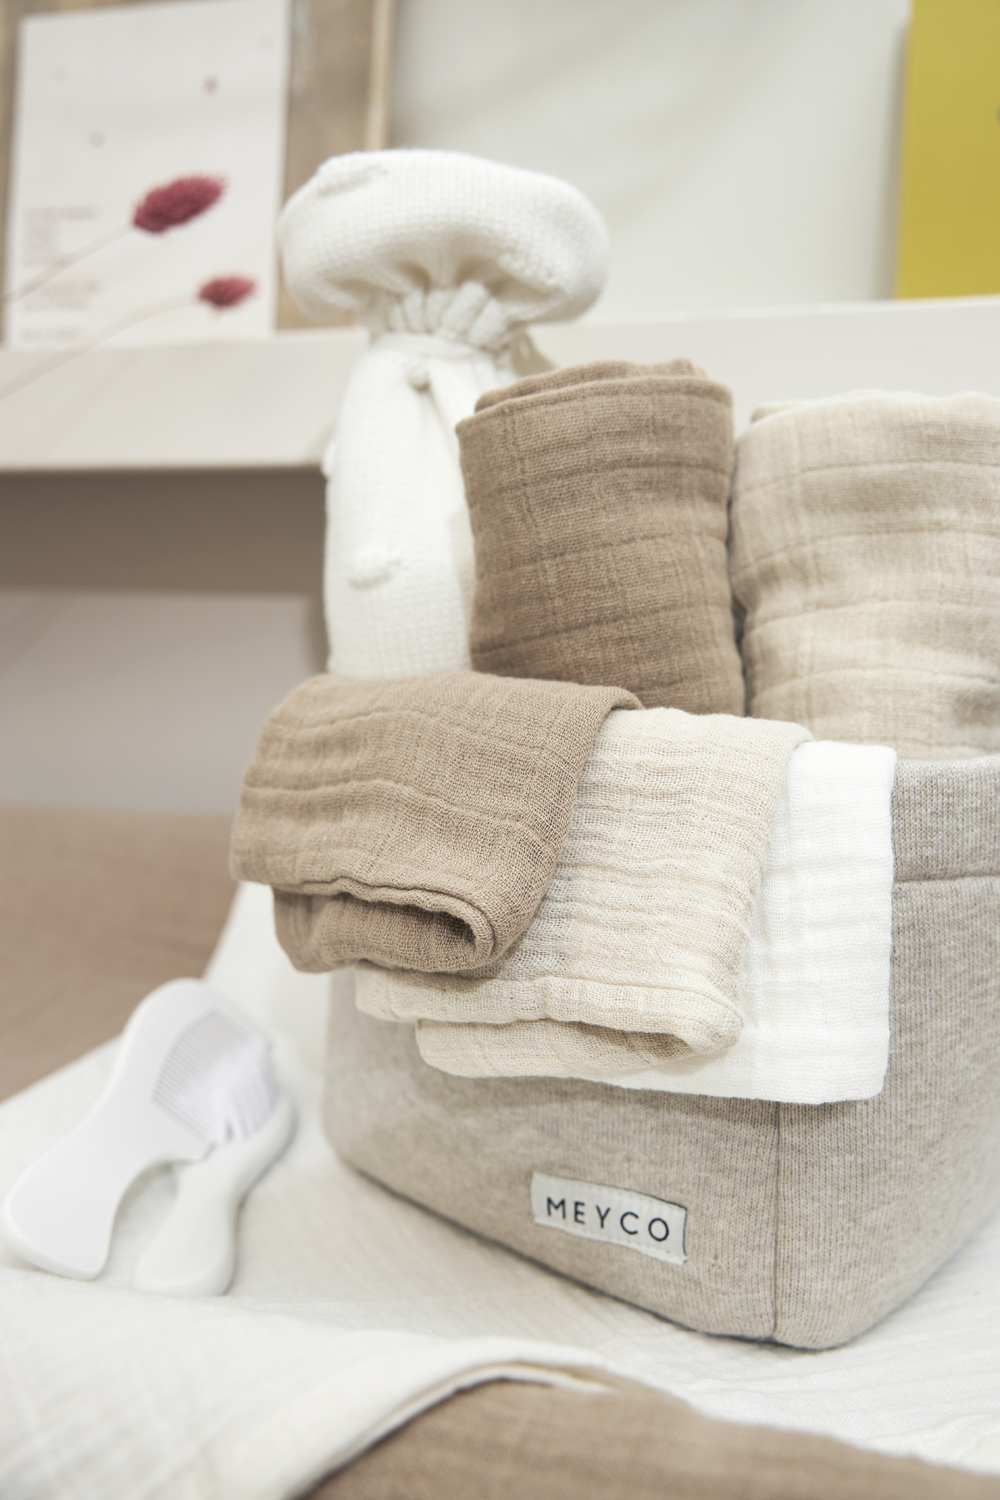 Nursery basket Knit Basic - sand melange - Small